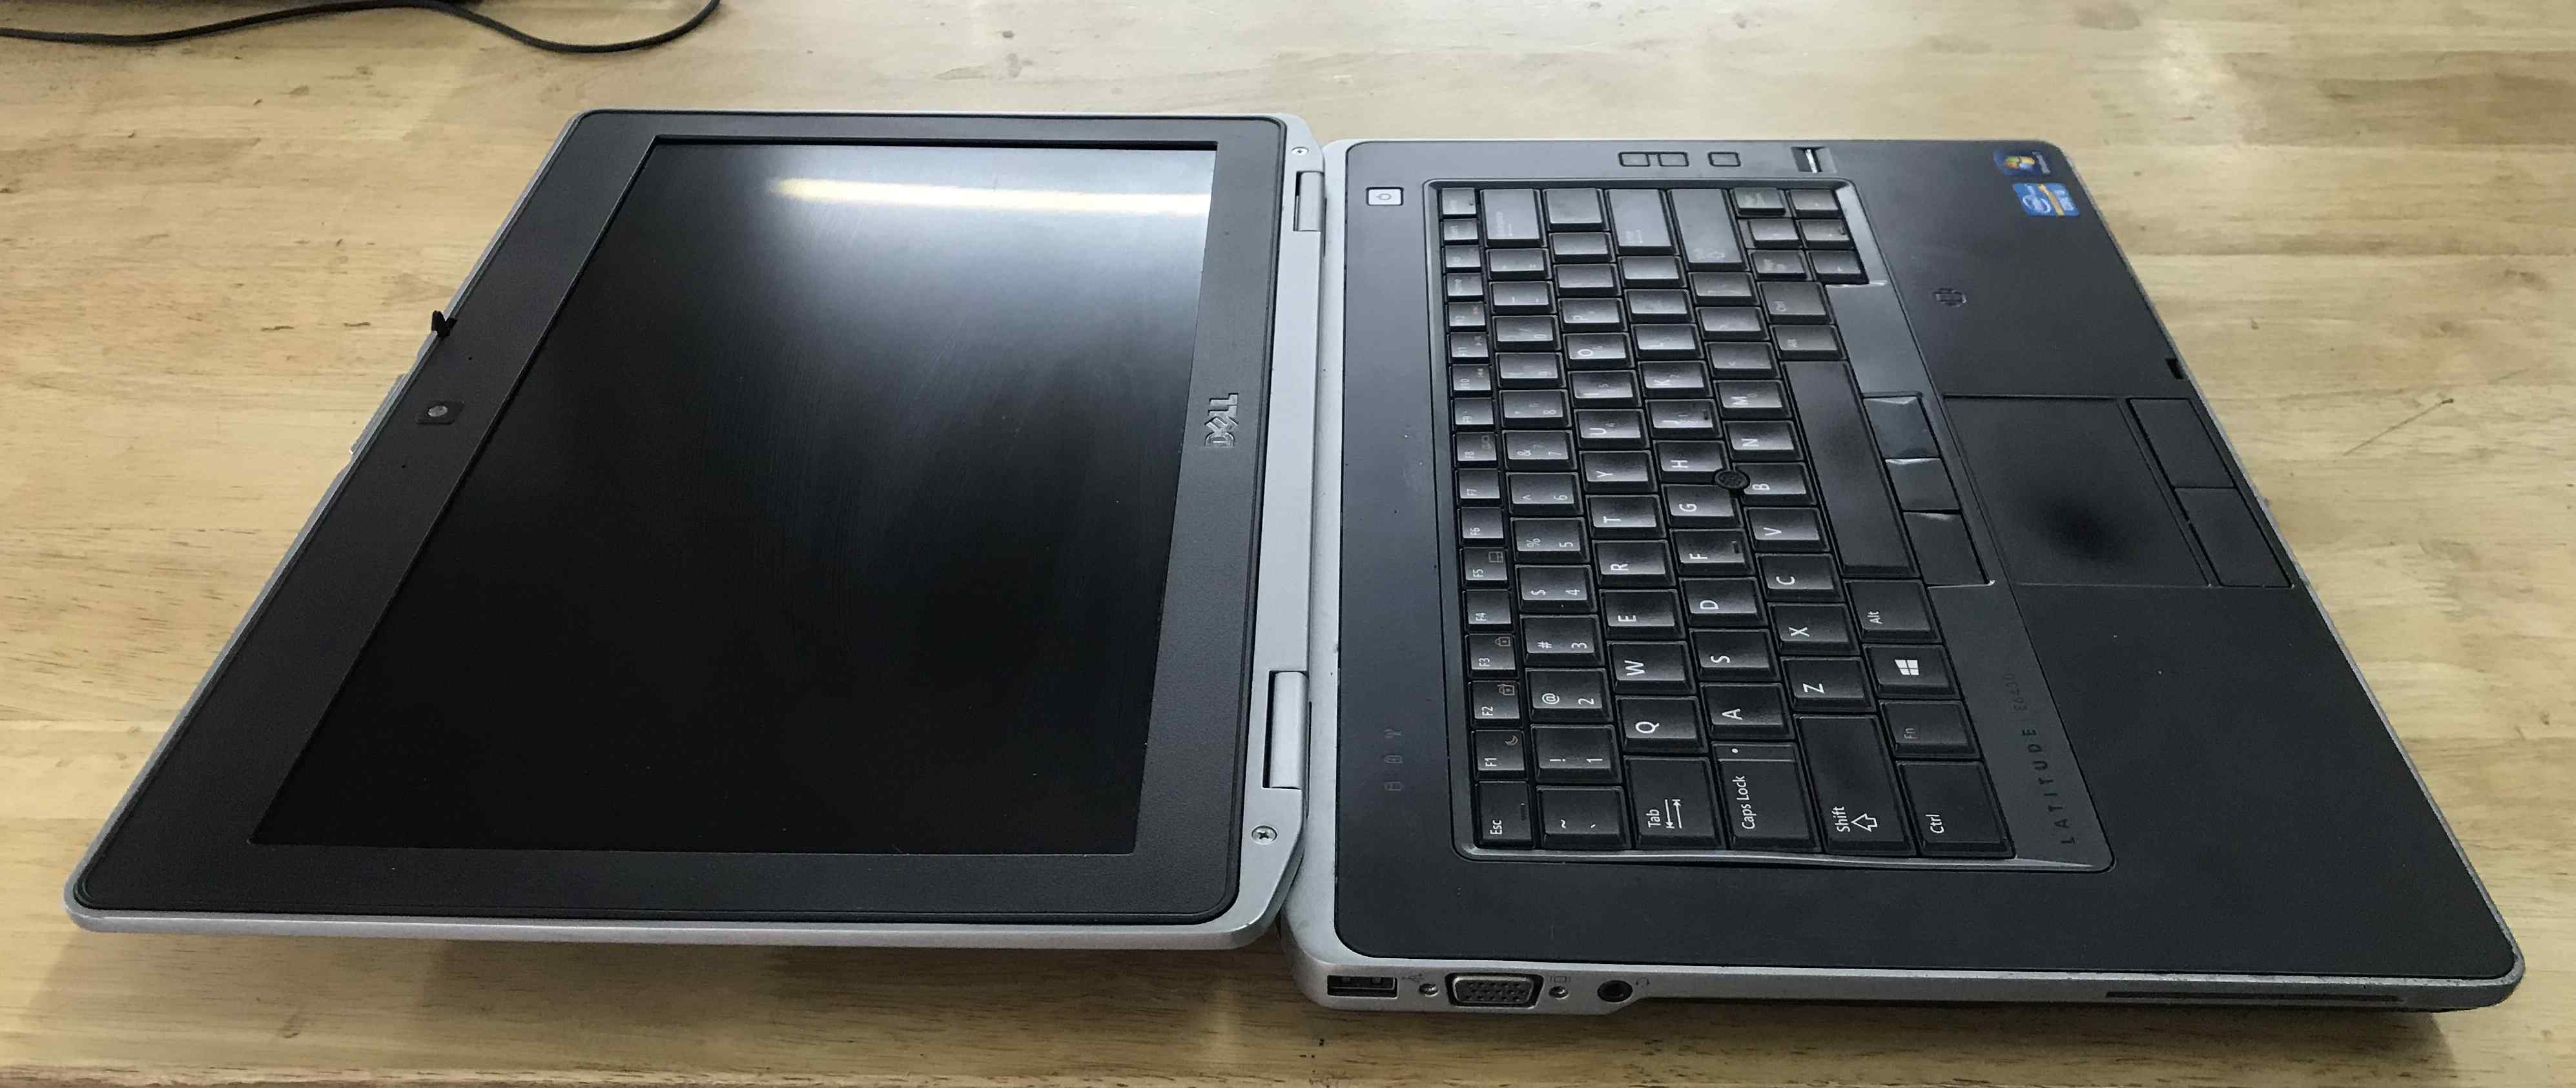 laptop cũ dell latitude E6430